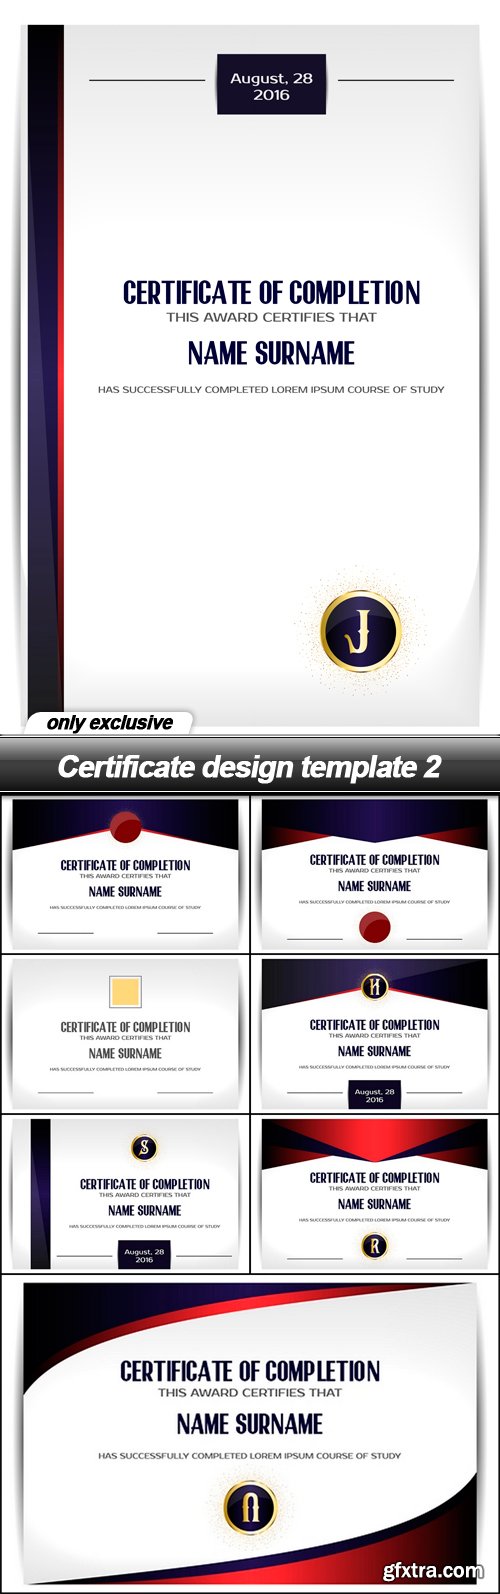 Certificate design template 2 - 8 EPS